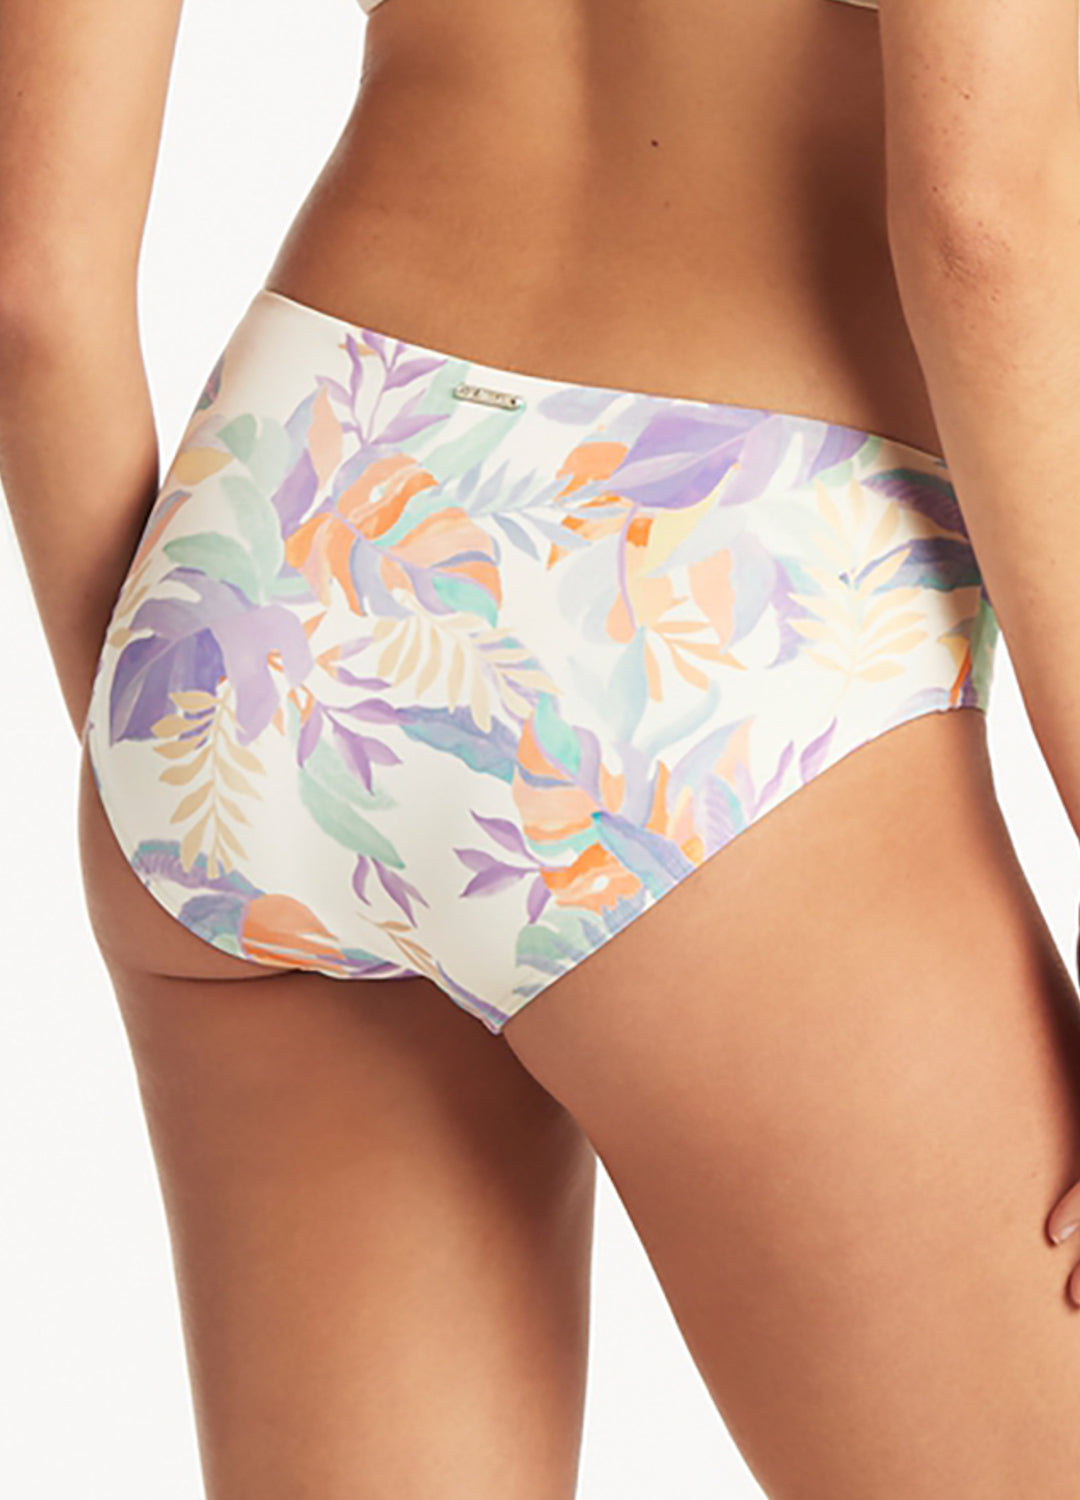 Sea Level Swim Australia 'Botanica' Mid Rise Cut Bikini Pant Bottom Swimsuit in White floral print at Inner Beach Co, Toronto, Ontario, Canada